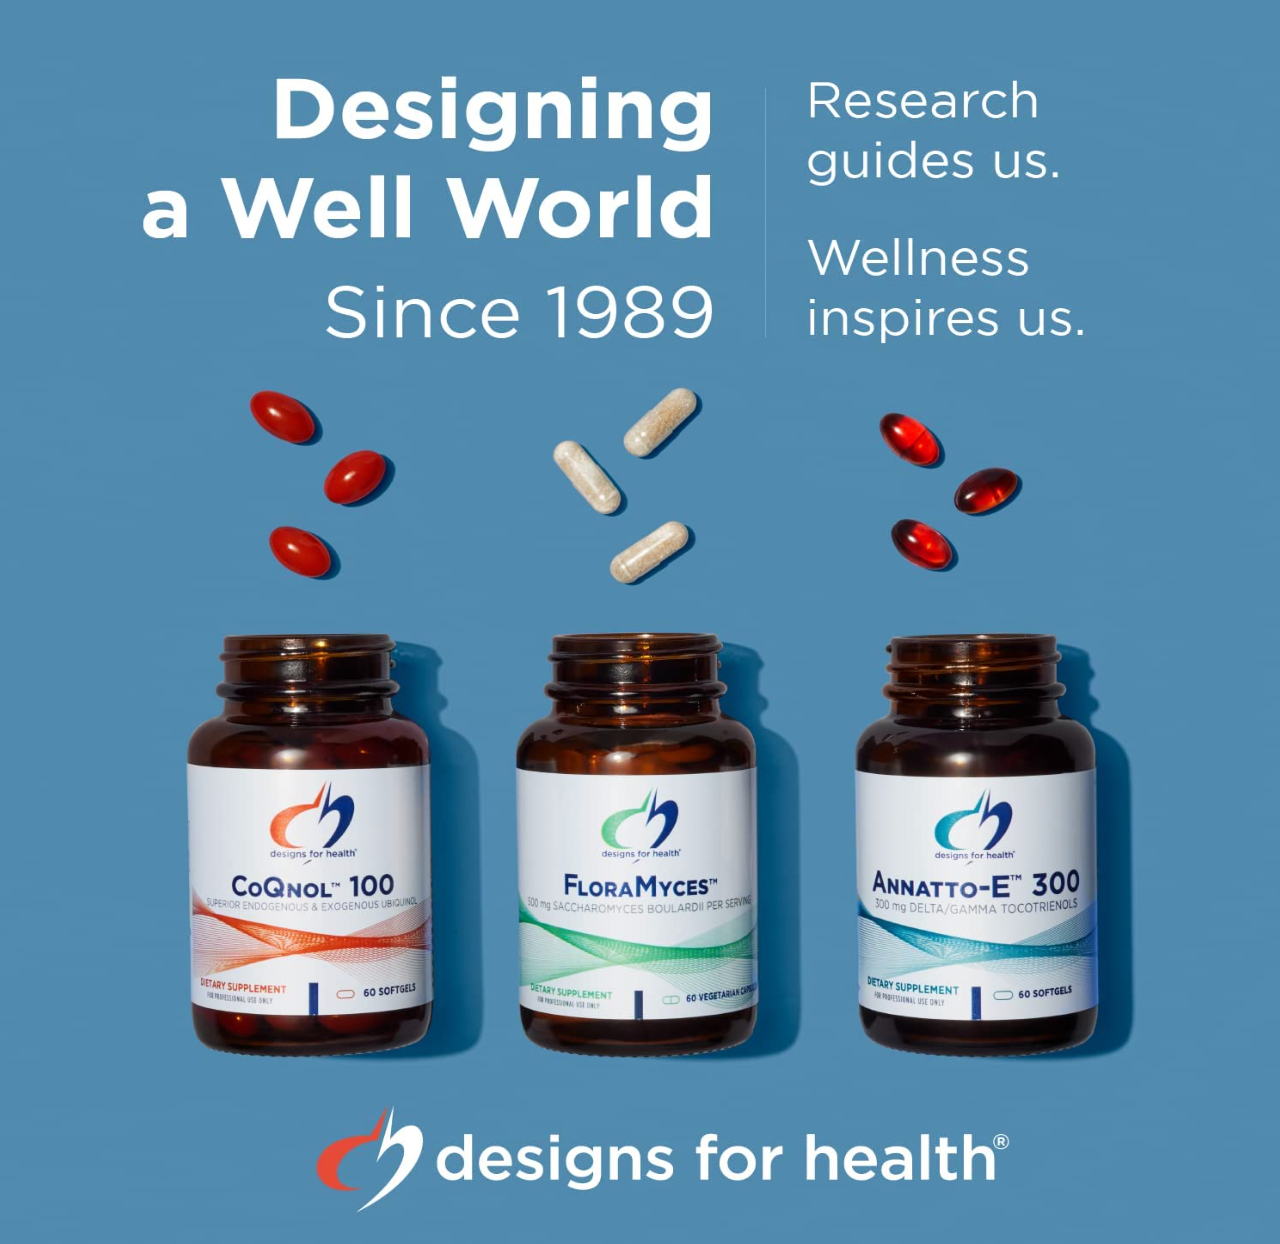 Designs for Health PS 150 Phosphatidylserine Capsules